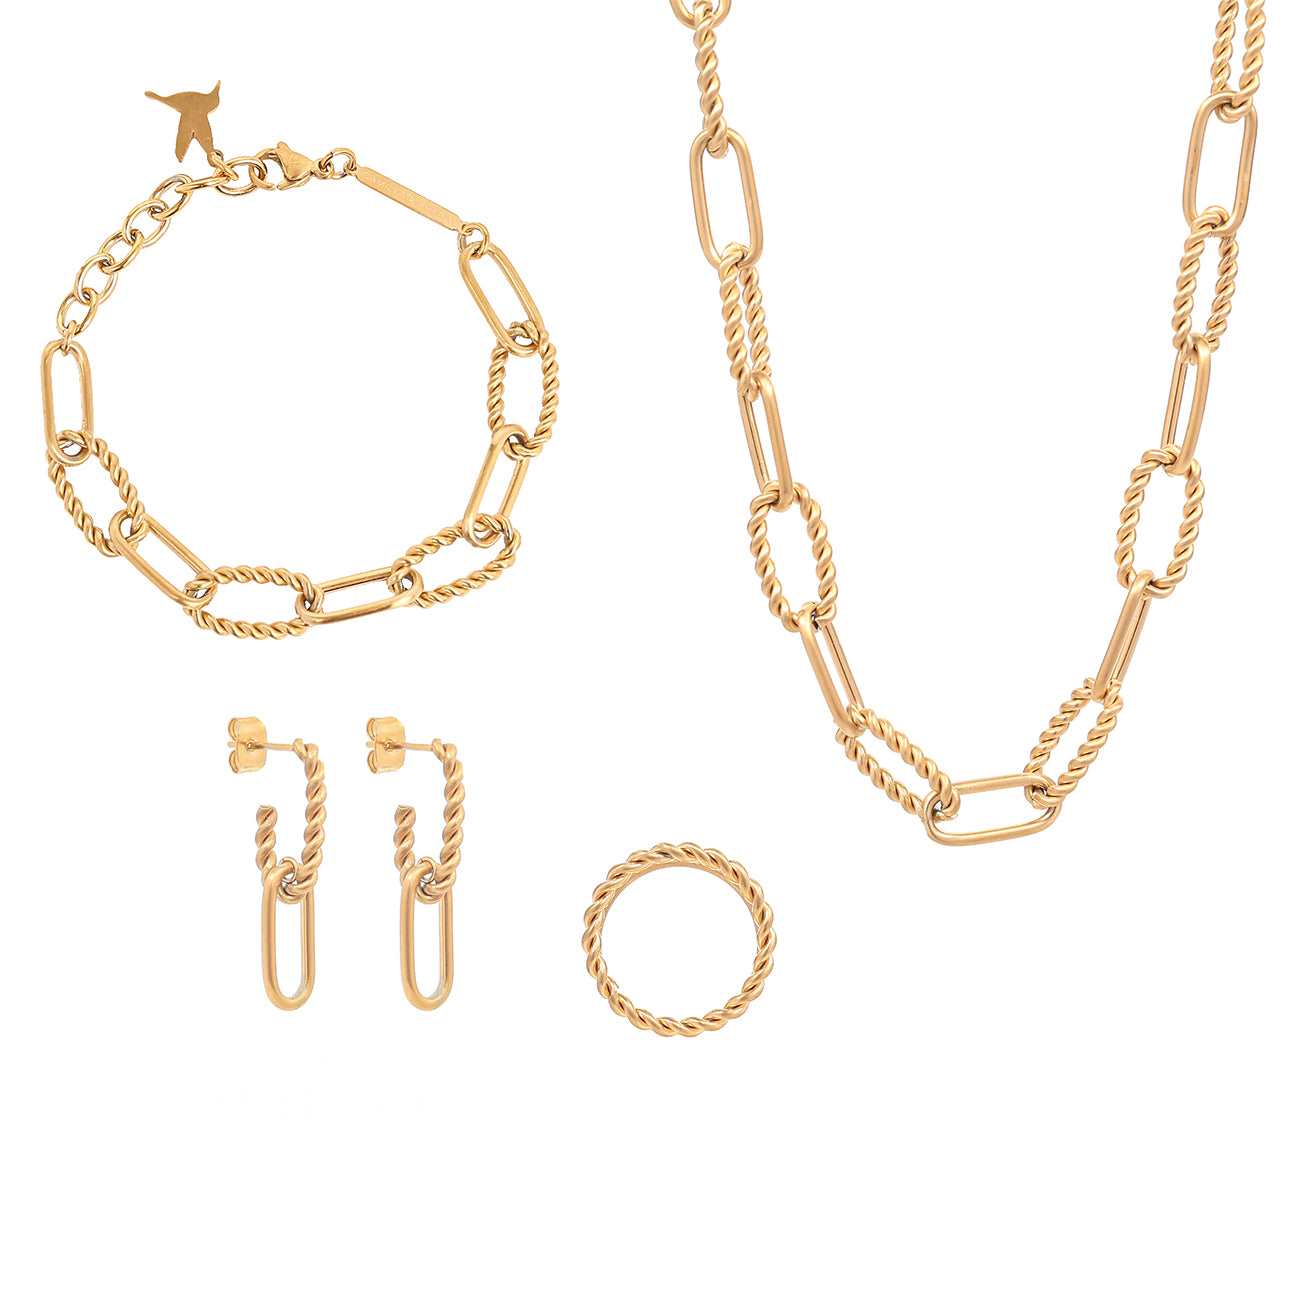 Malin chain necklace